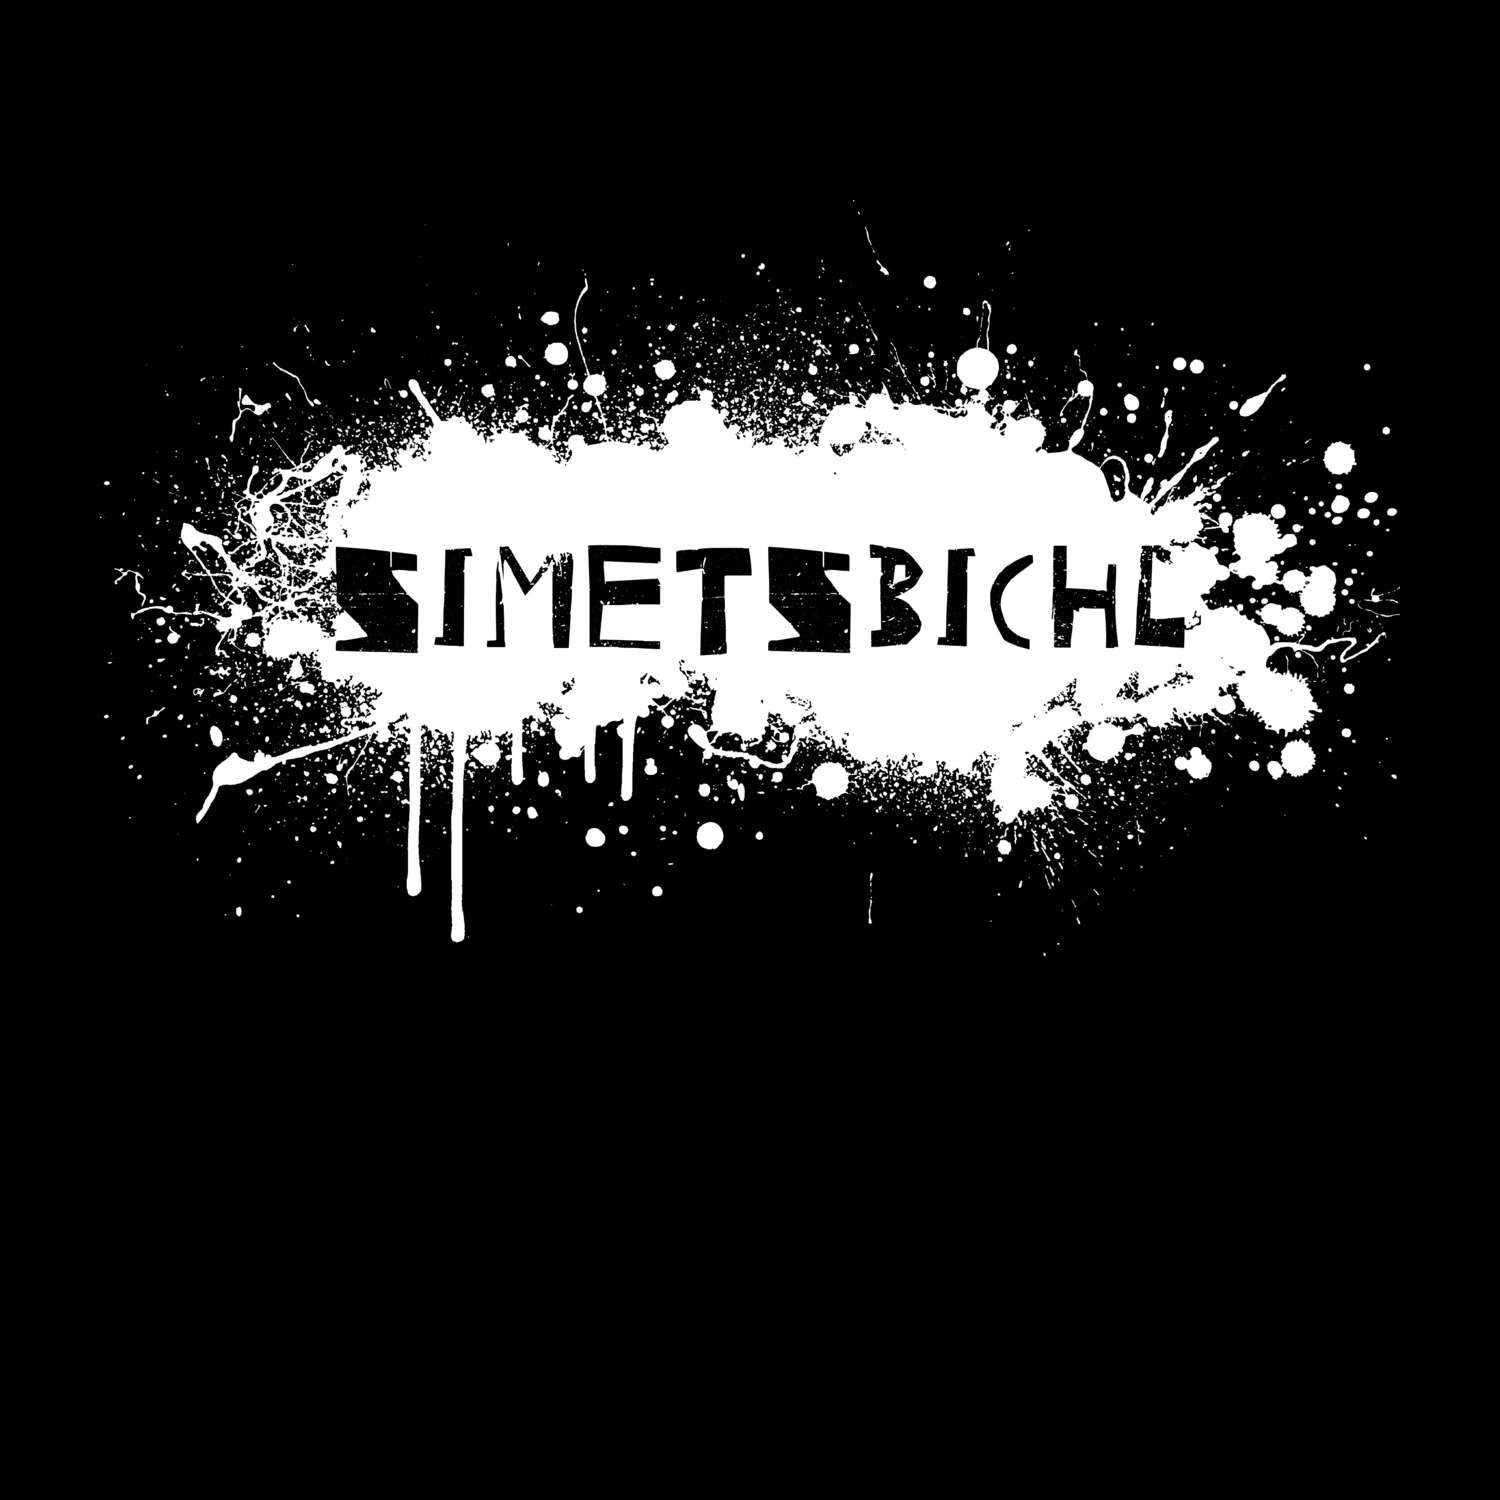 Simetsbichl T-Shirt »Paint Splash Punk«